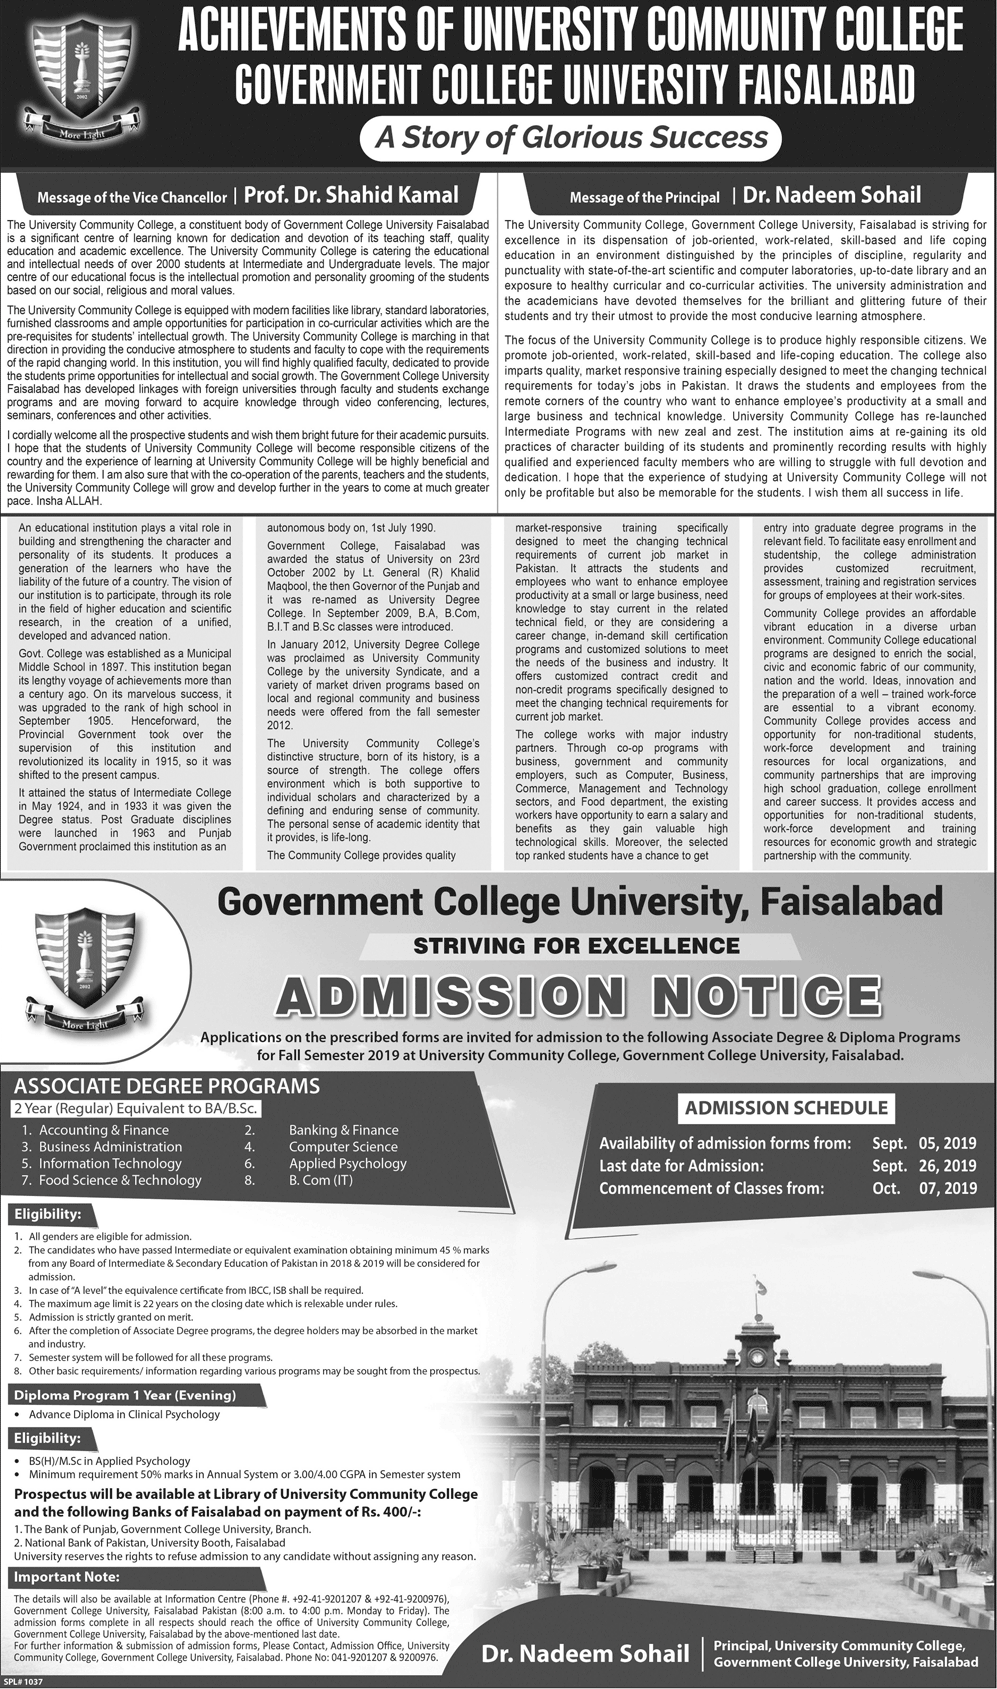 GCU Faisalabad Admission 2019 in Associate Degree Programs (BA, B.Sc), Merit List